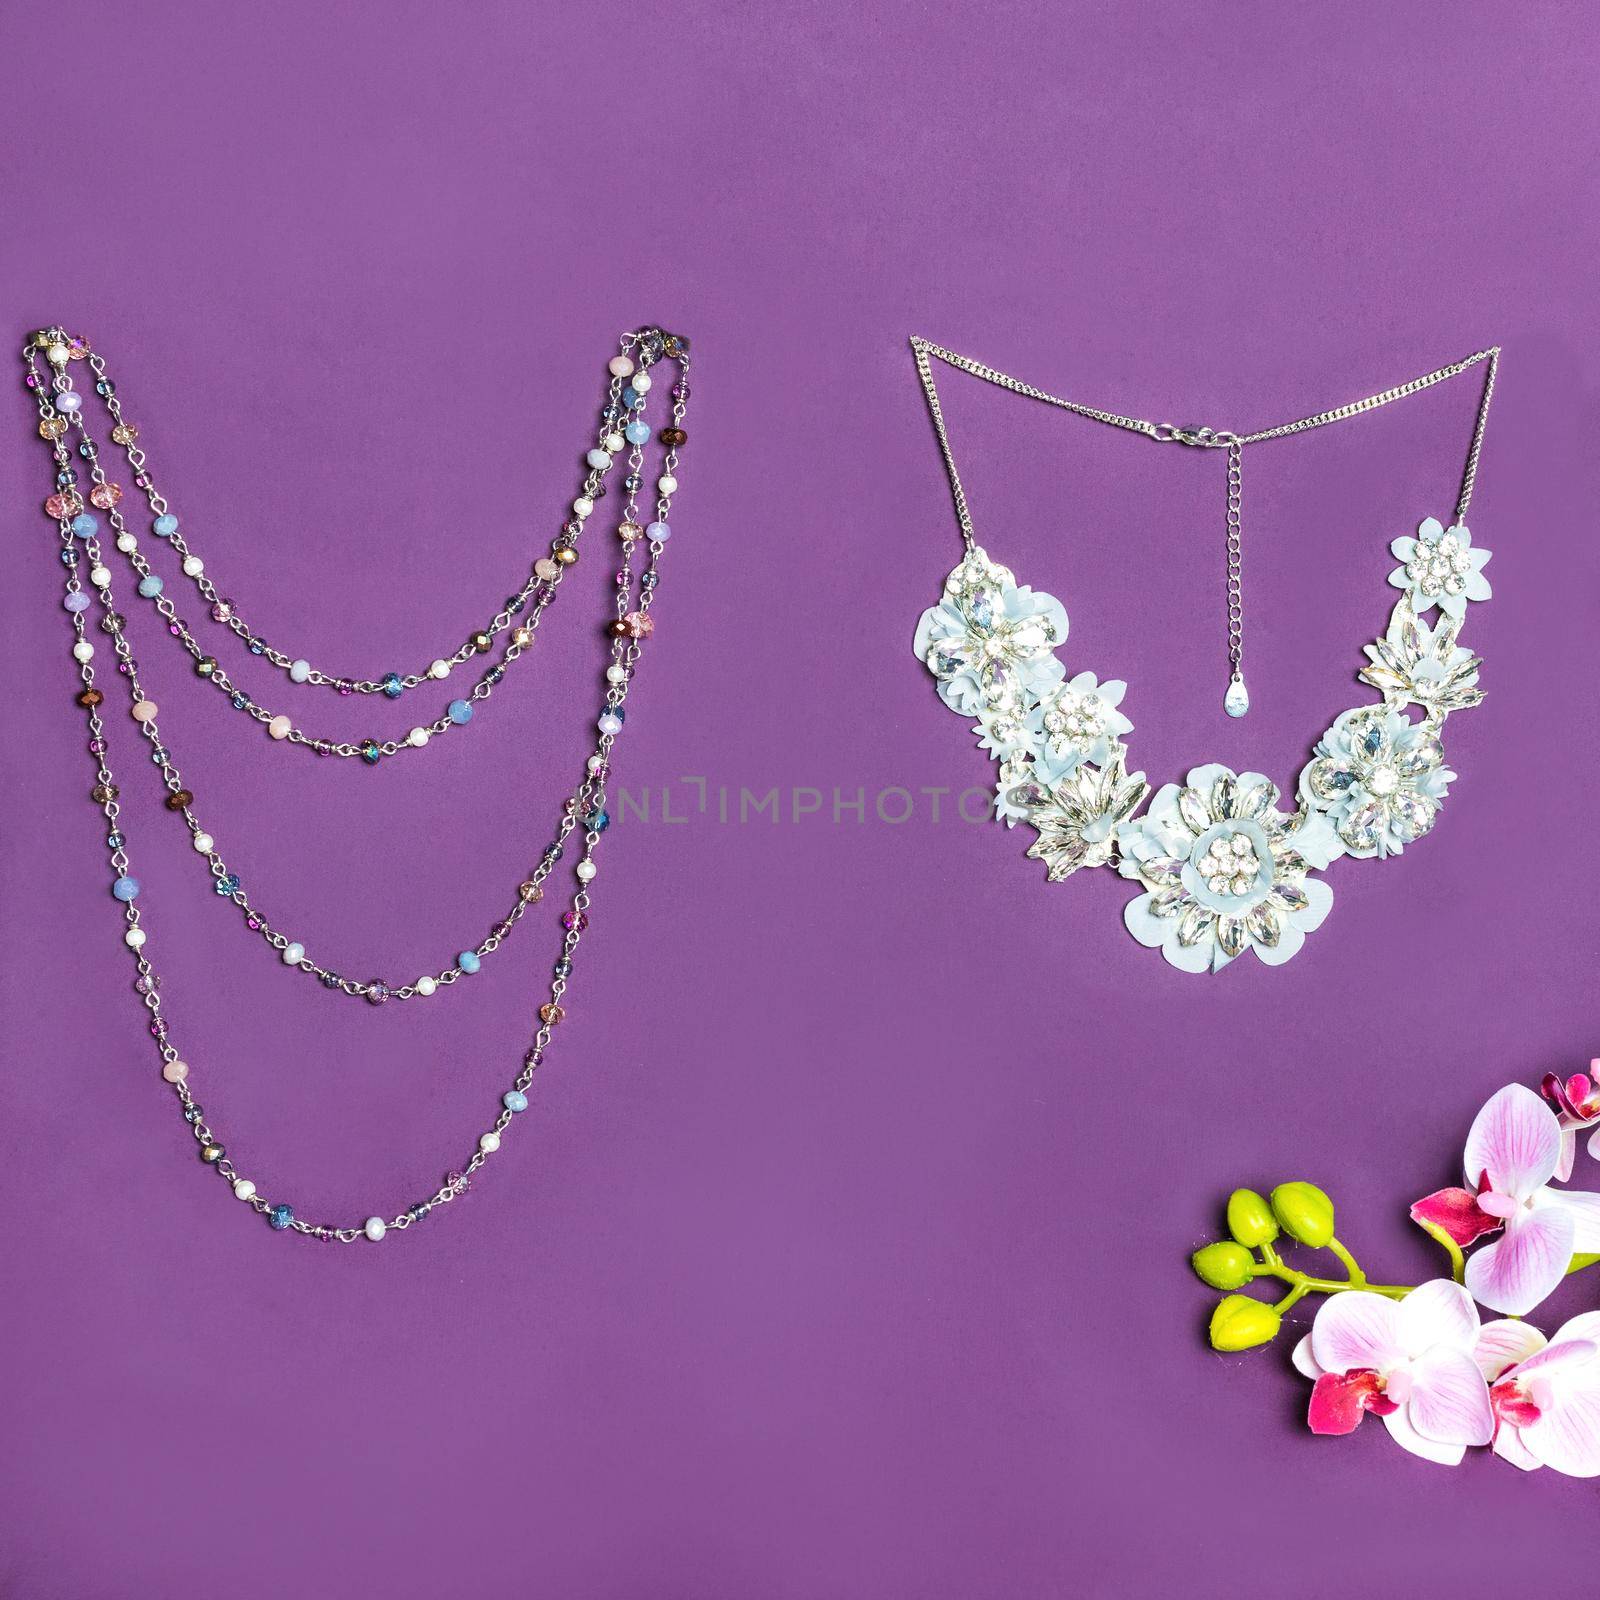 Elegant gold necklace with diamonds on purple background